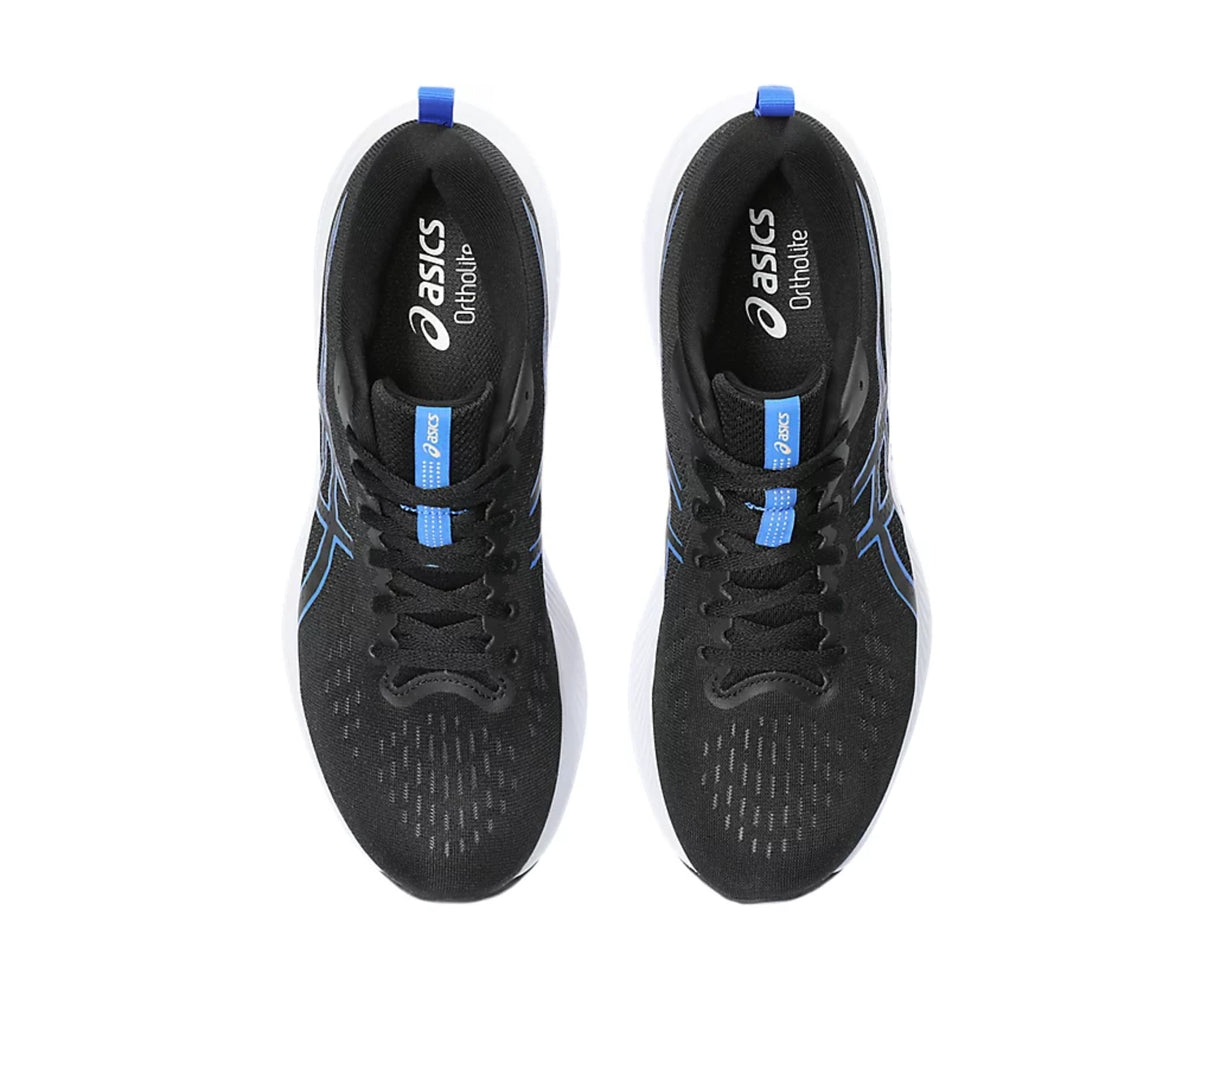 Asics GEL-EXCITE 10 Sports Running Shoes Black/Illusion Blue 1011B600